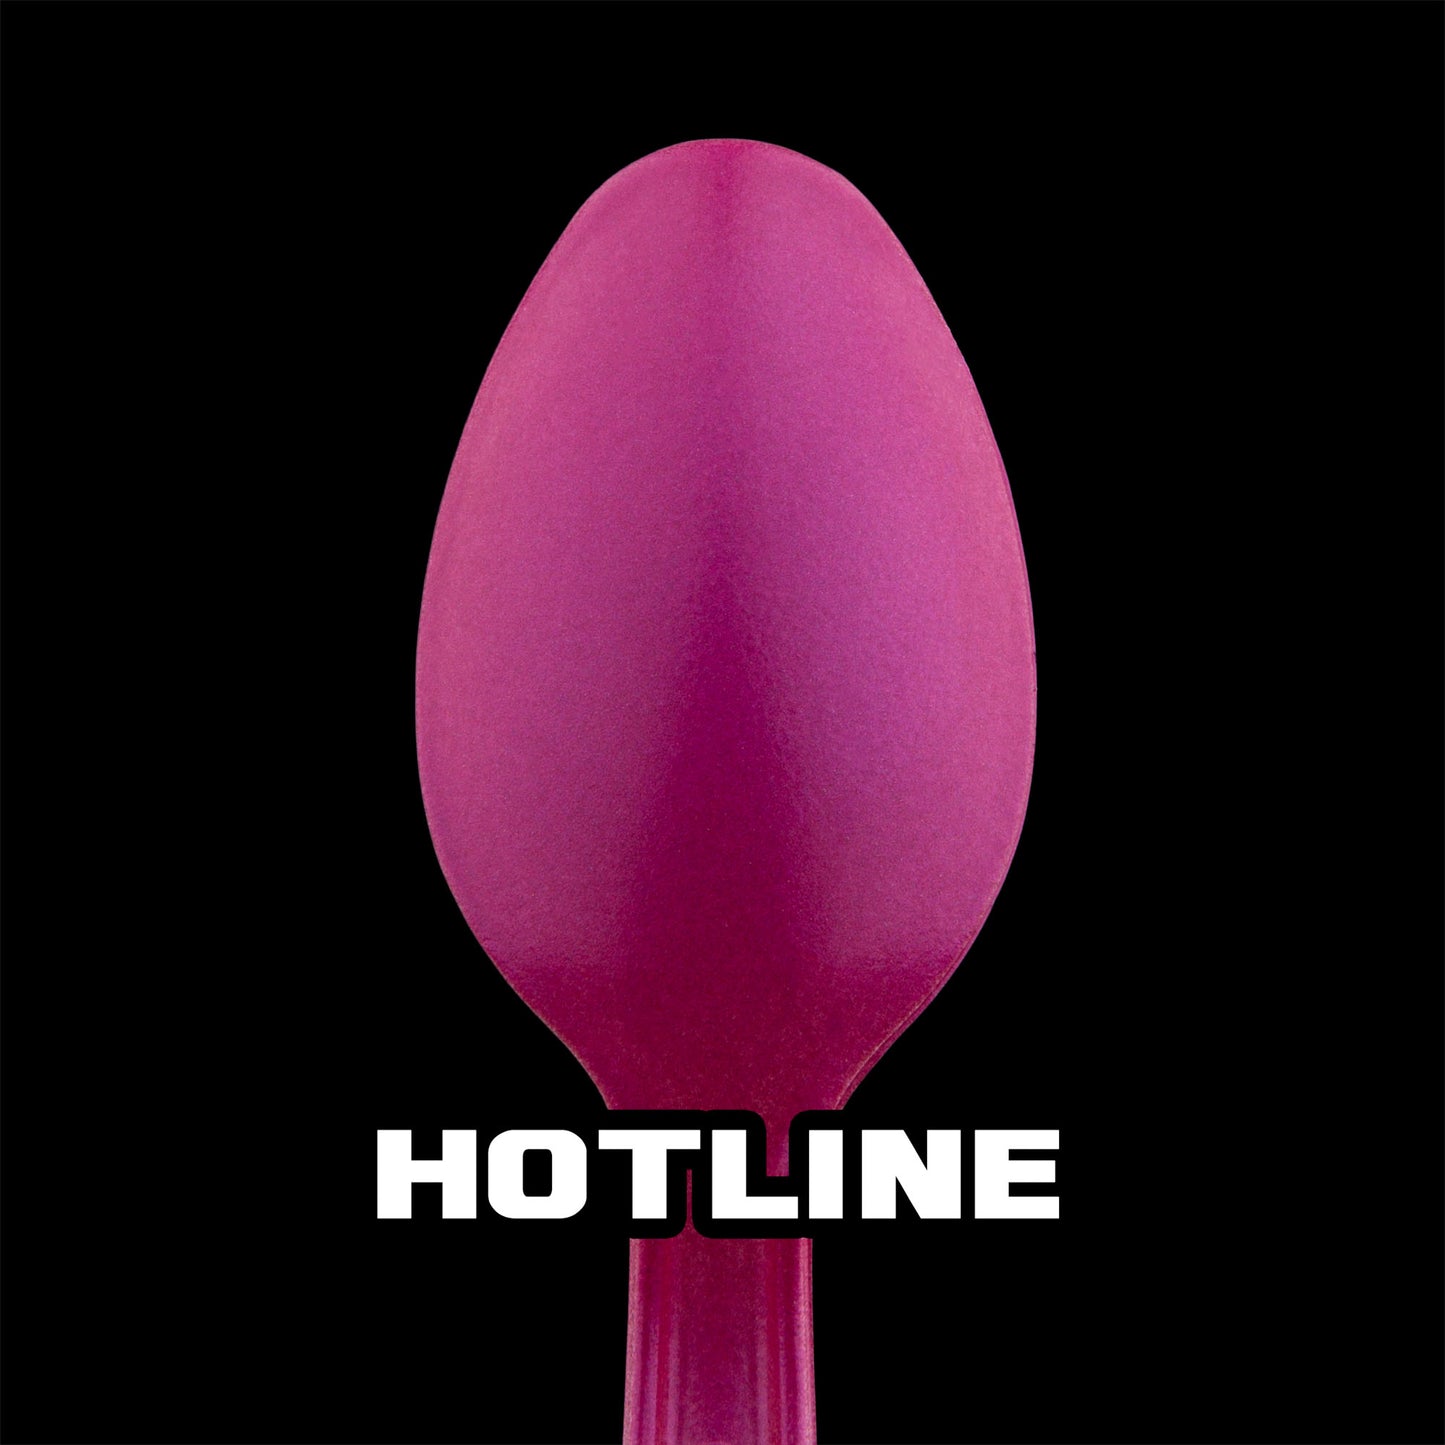 spoon with hot pink metallic paint (Hotline)